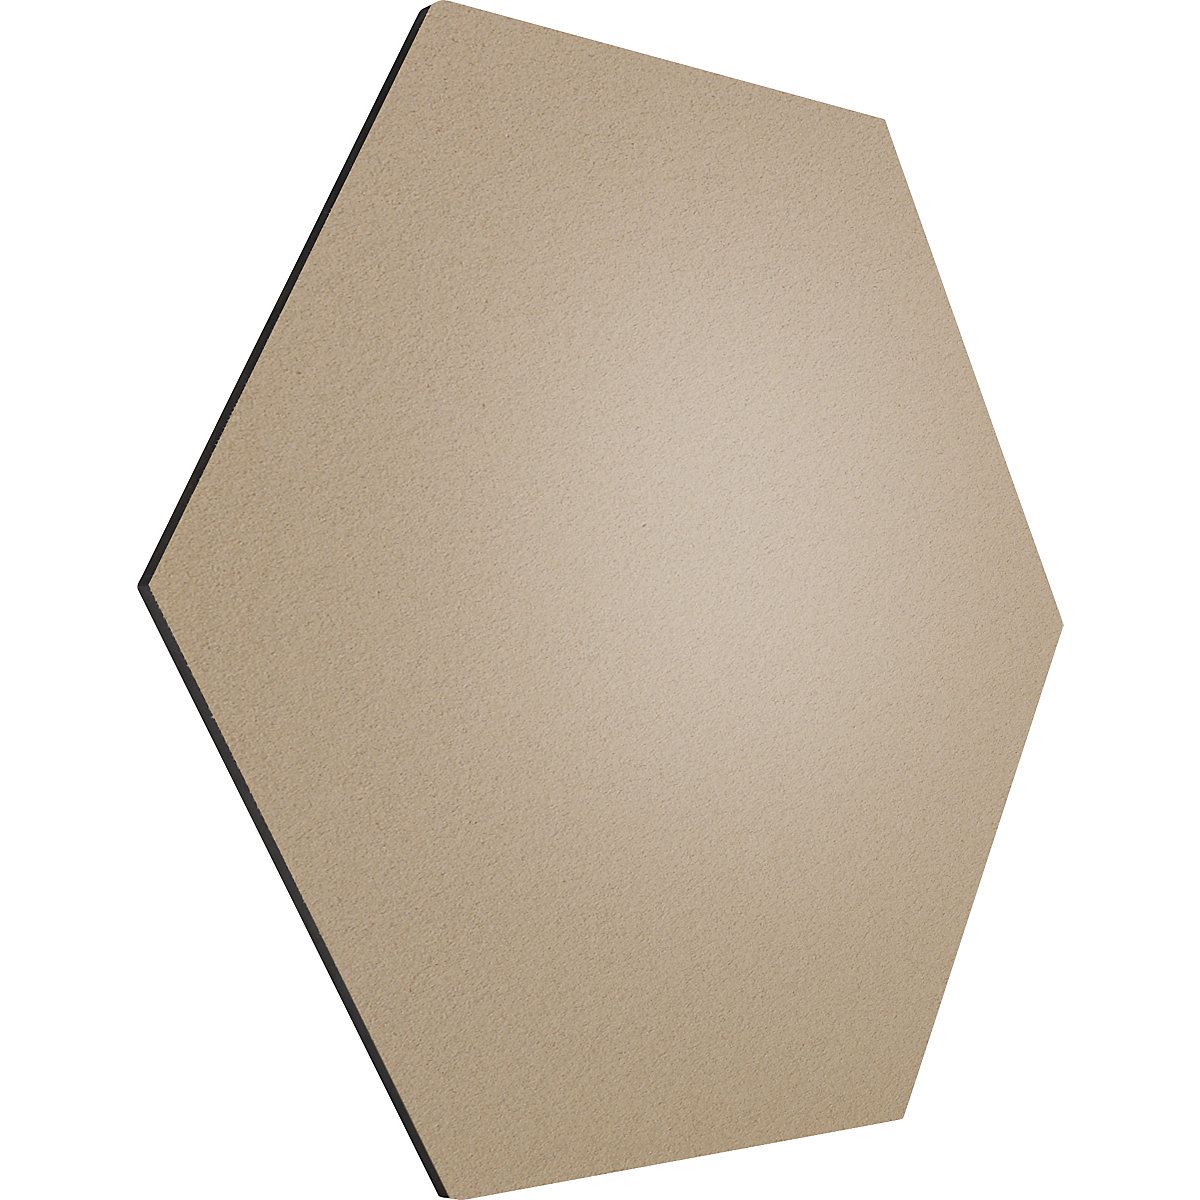 Design-Pinnwand sechseckig Chameleon, Kork, BxH 600 x 600 mm, beige-31